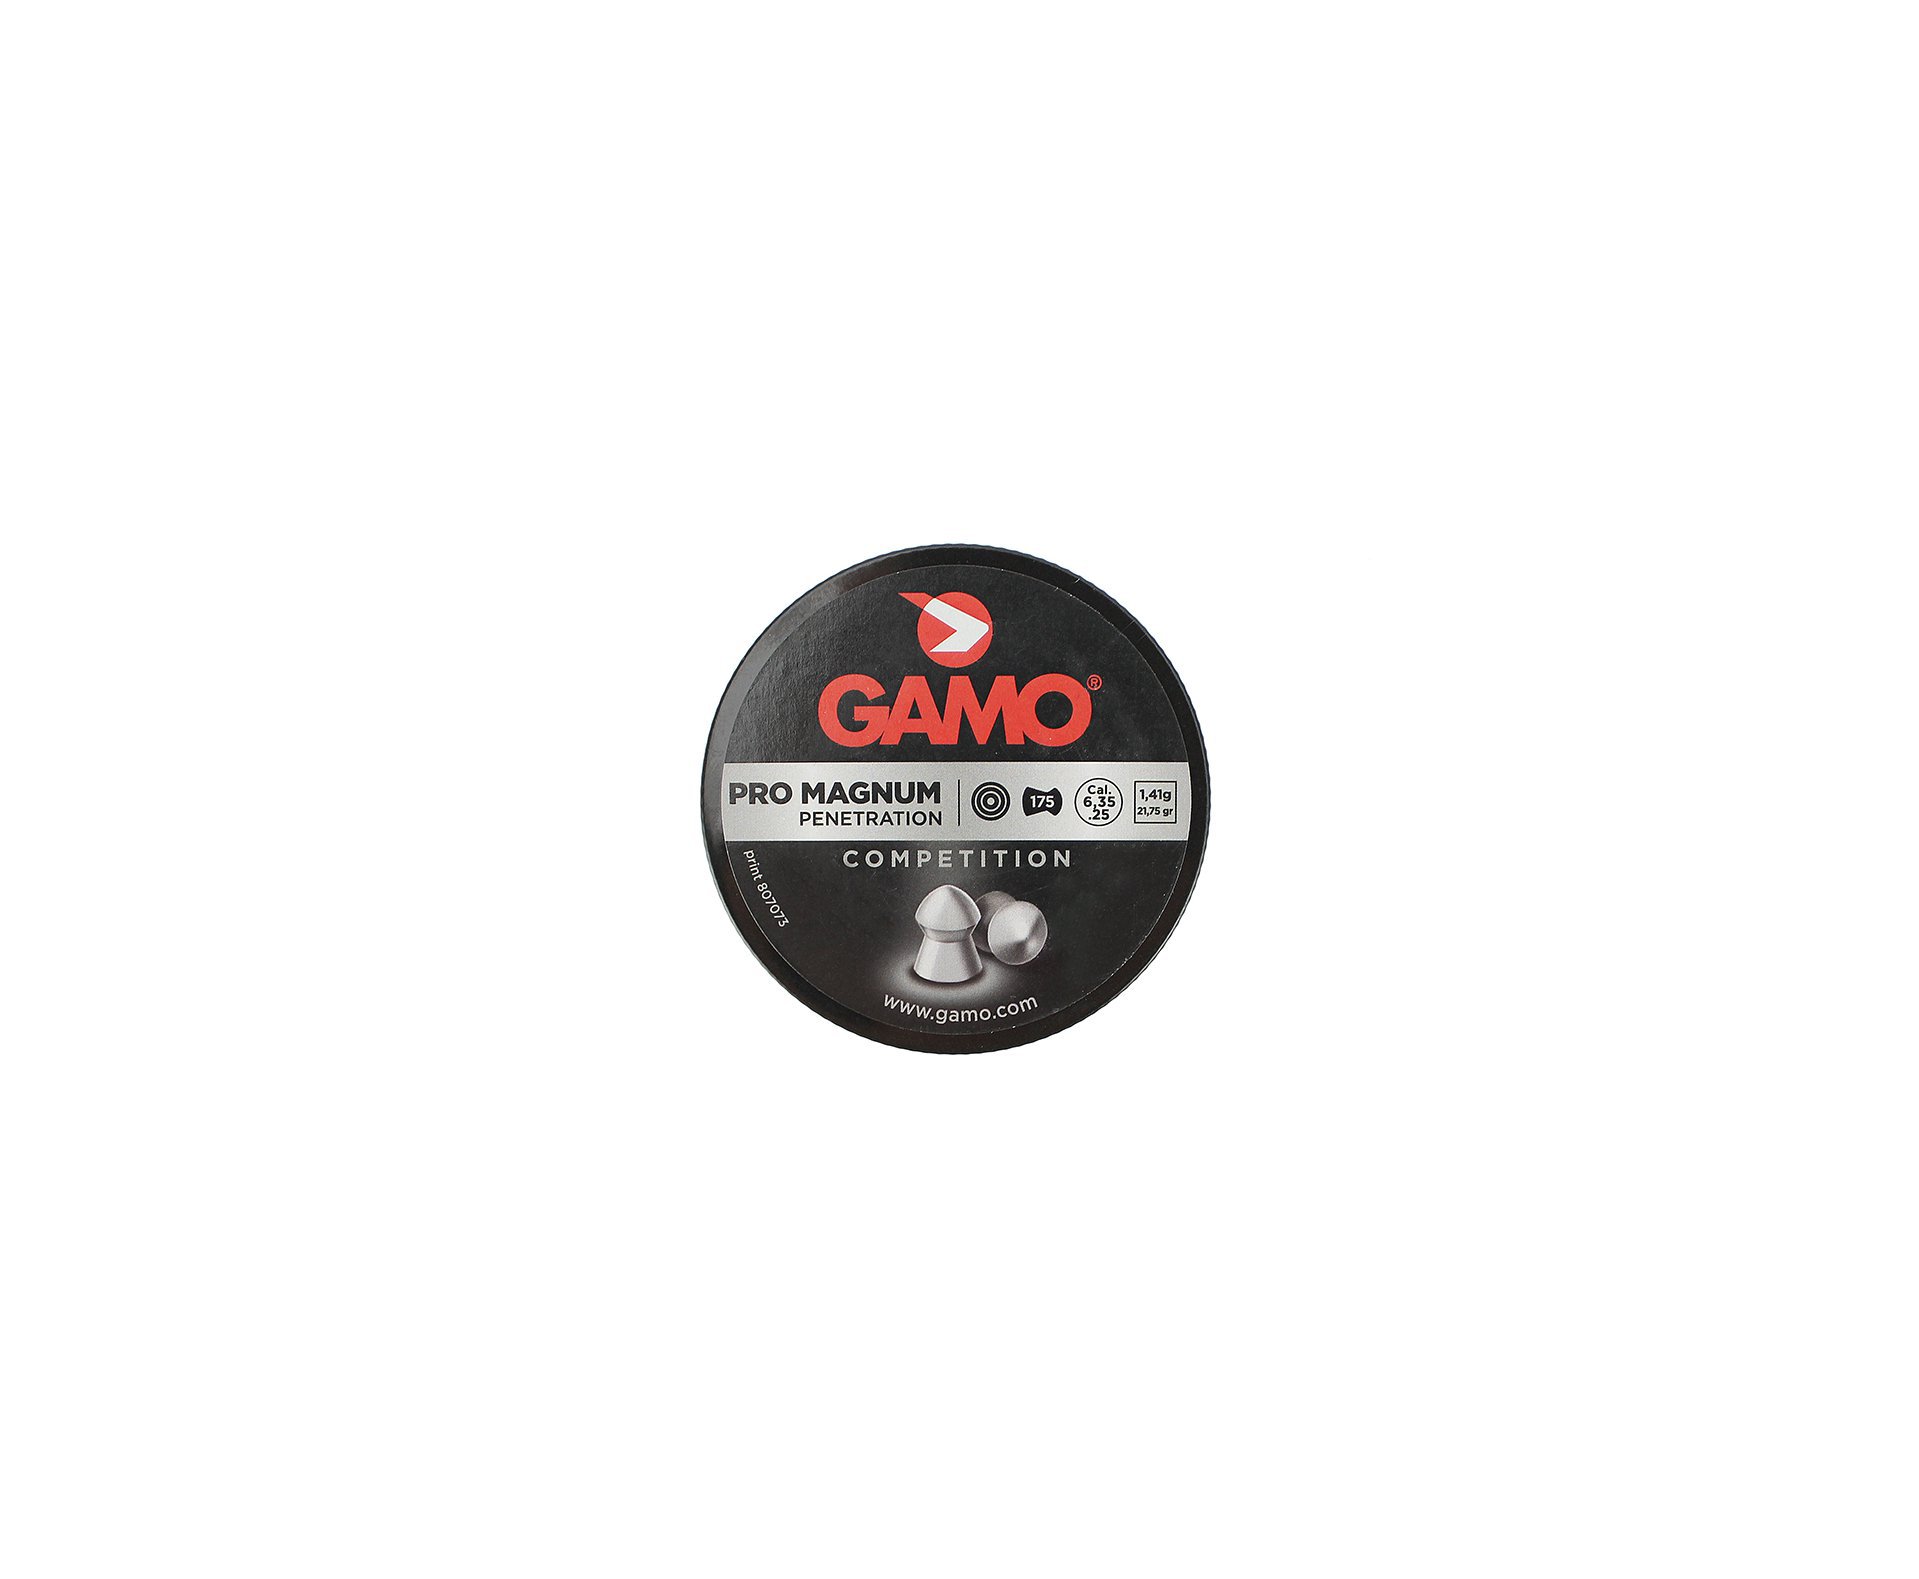 Chumbinho Gamo Pro Magnum Penetration Competition 6.35mm Com 175und